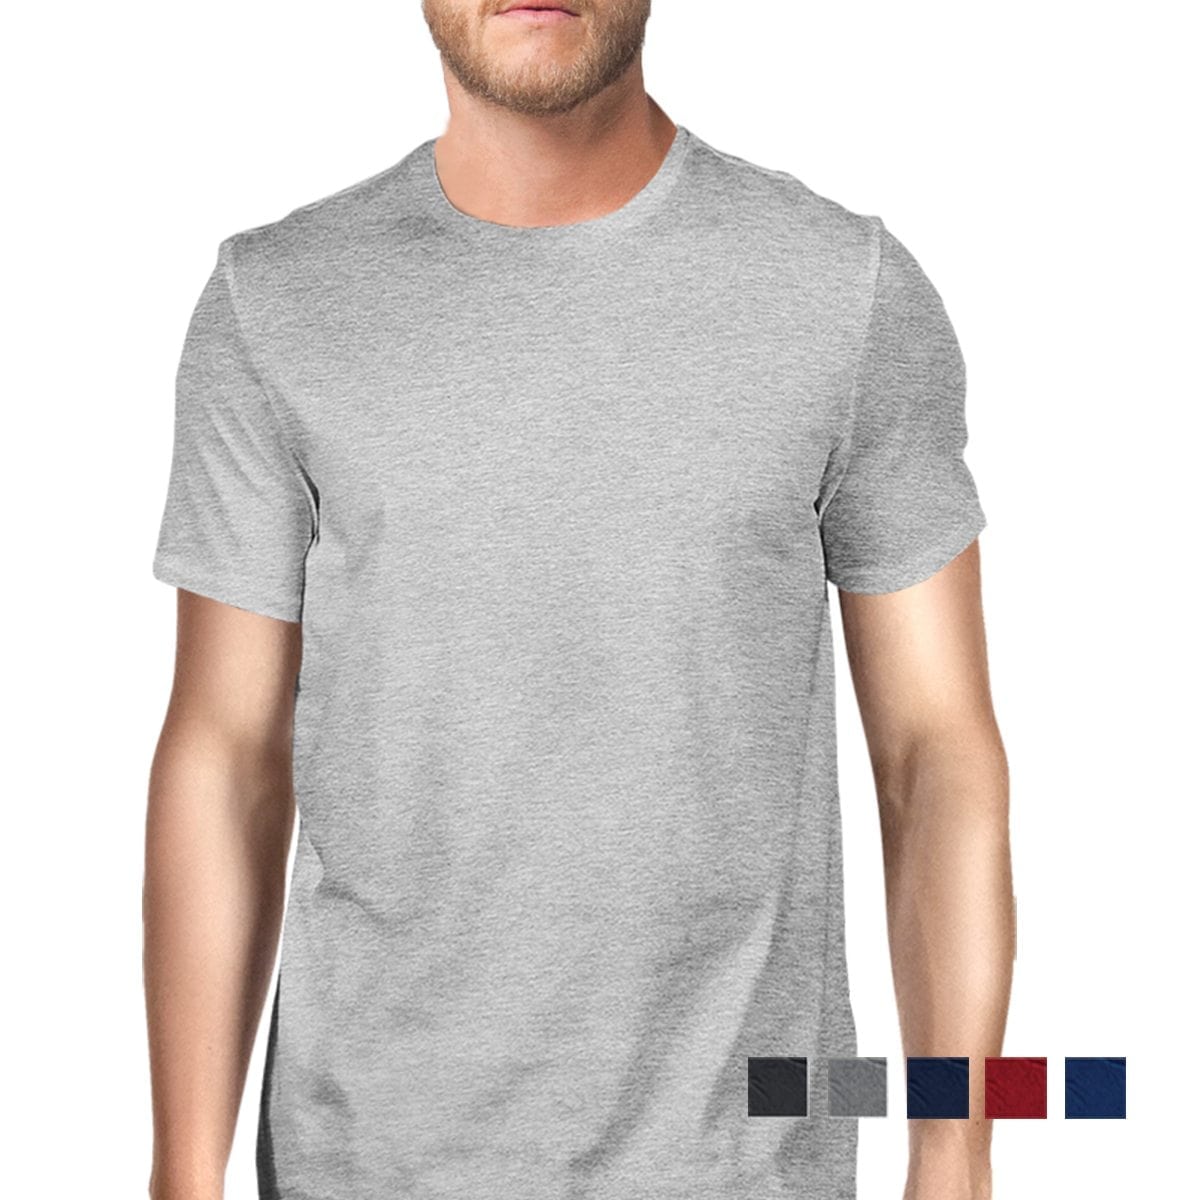 Men's Crew Neck Blank T-Shirts | AA Print Supply